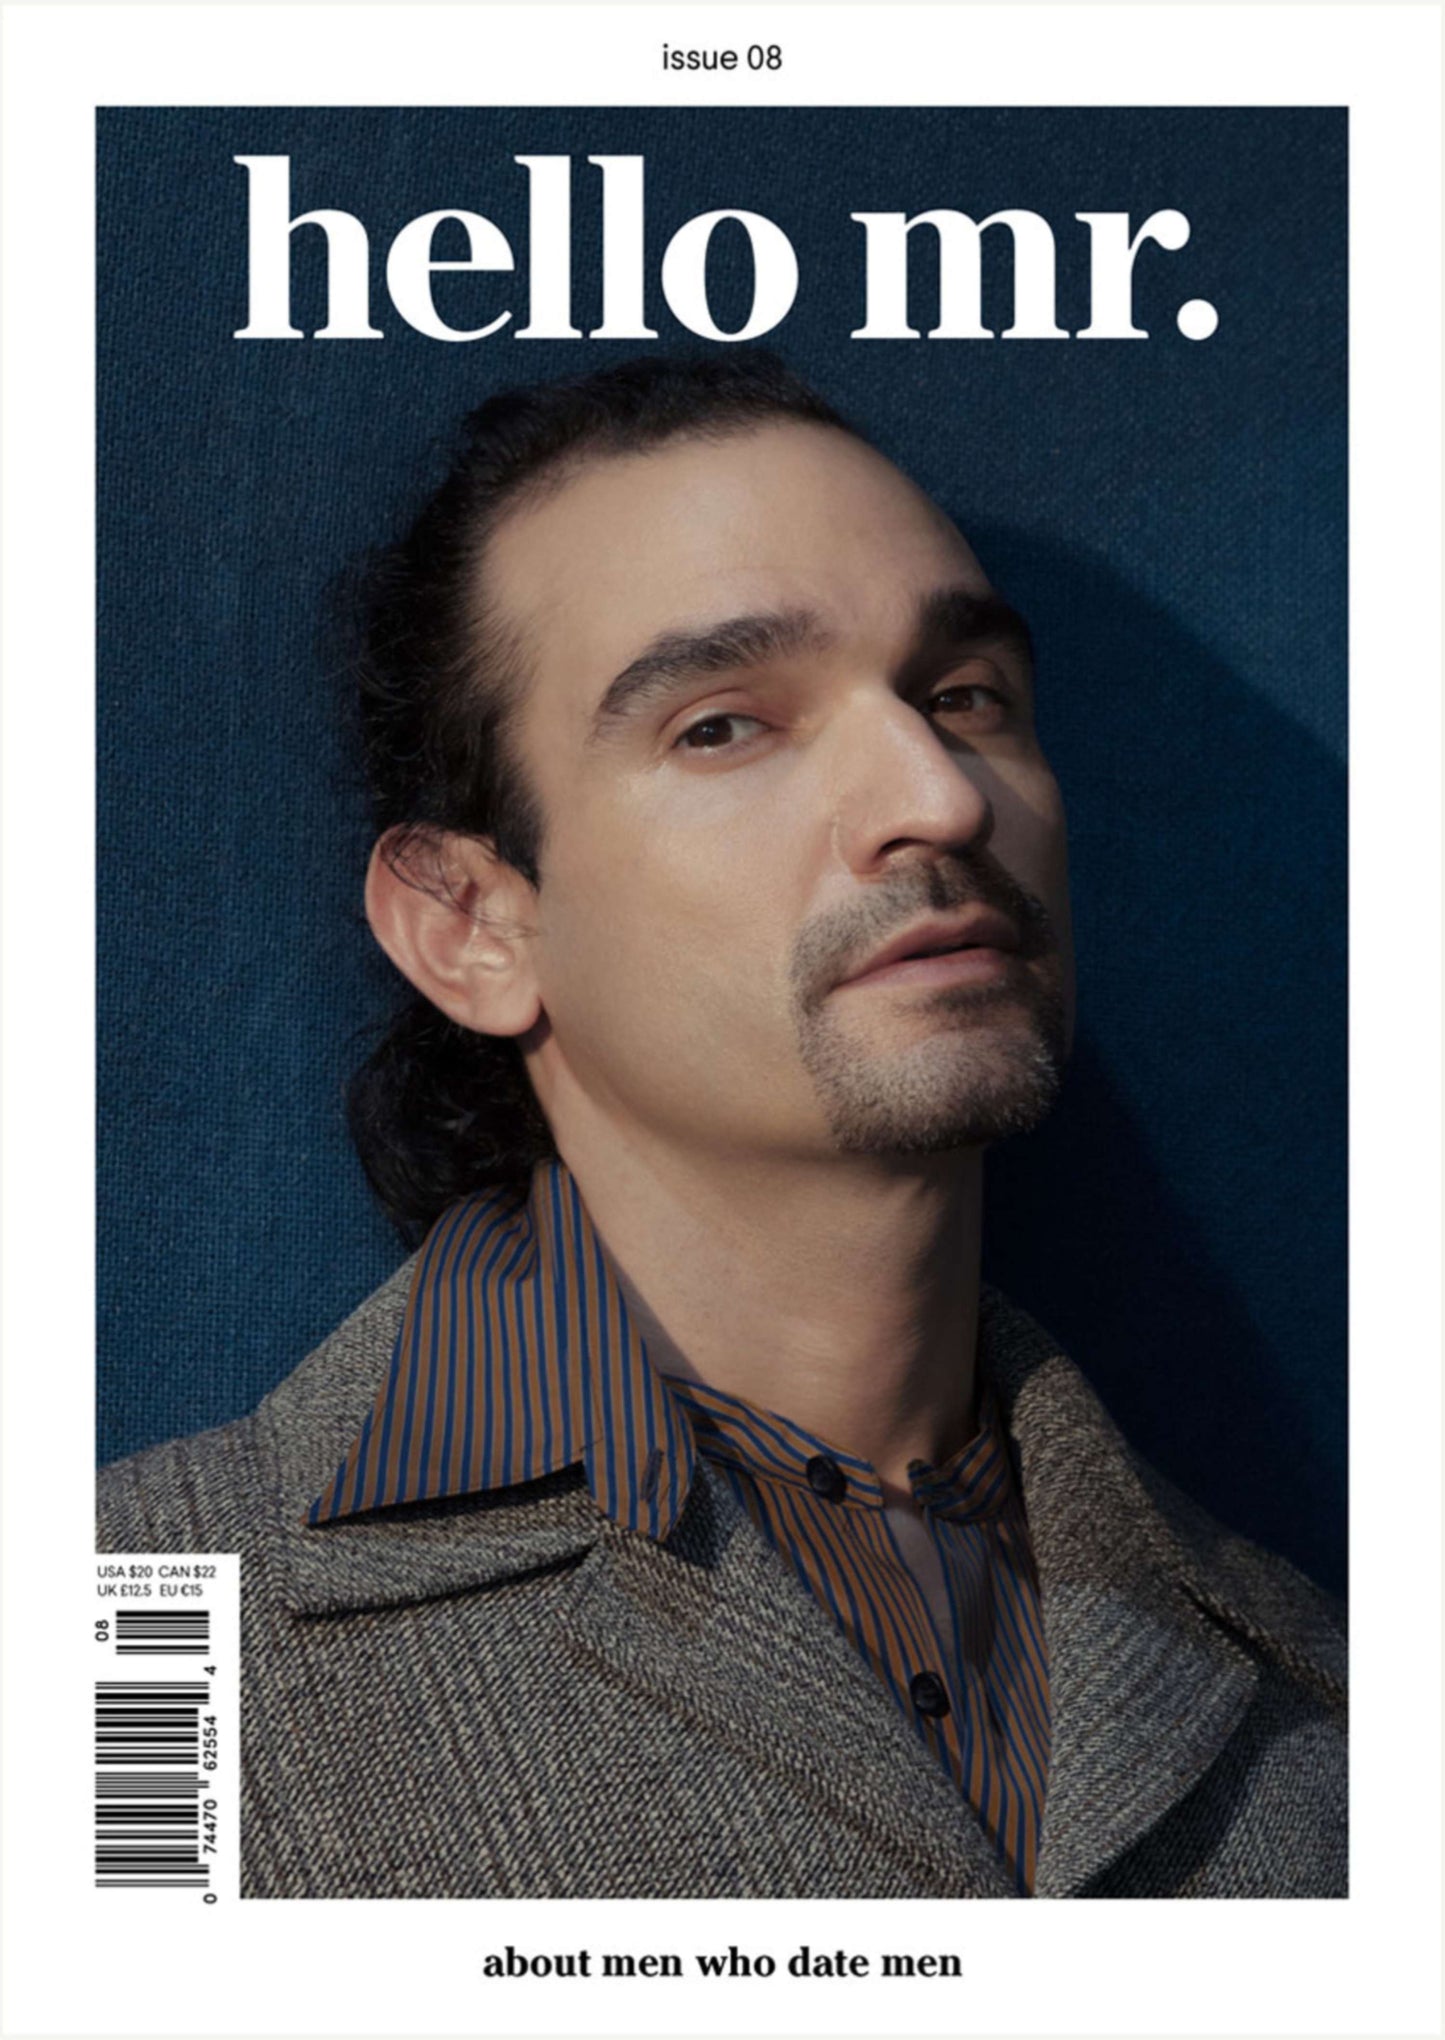 "Hello Mr." Magazine